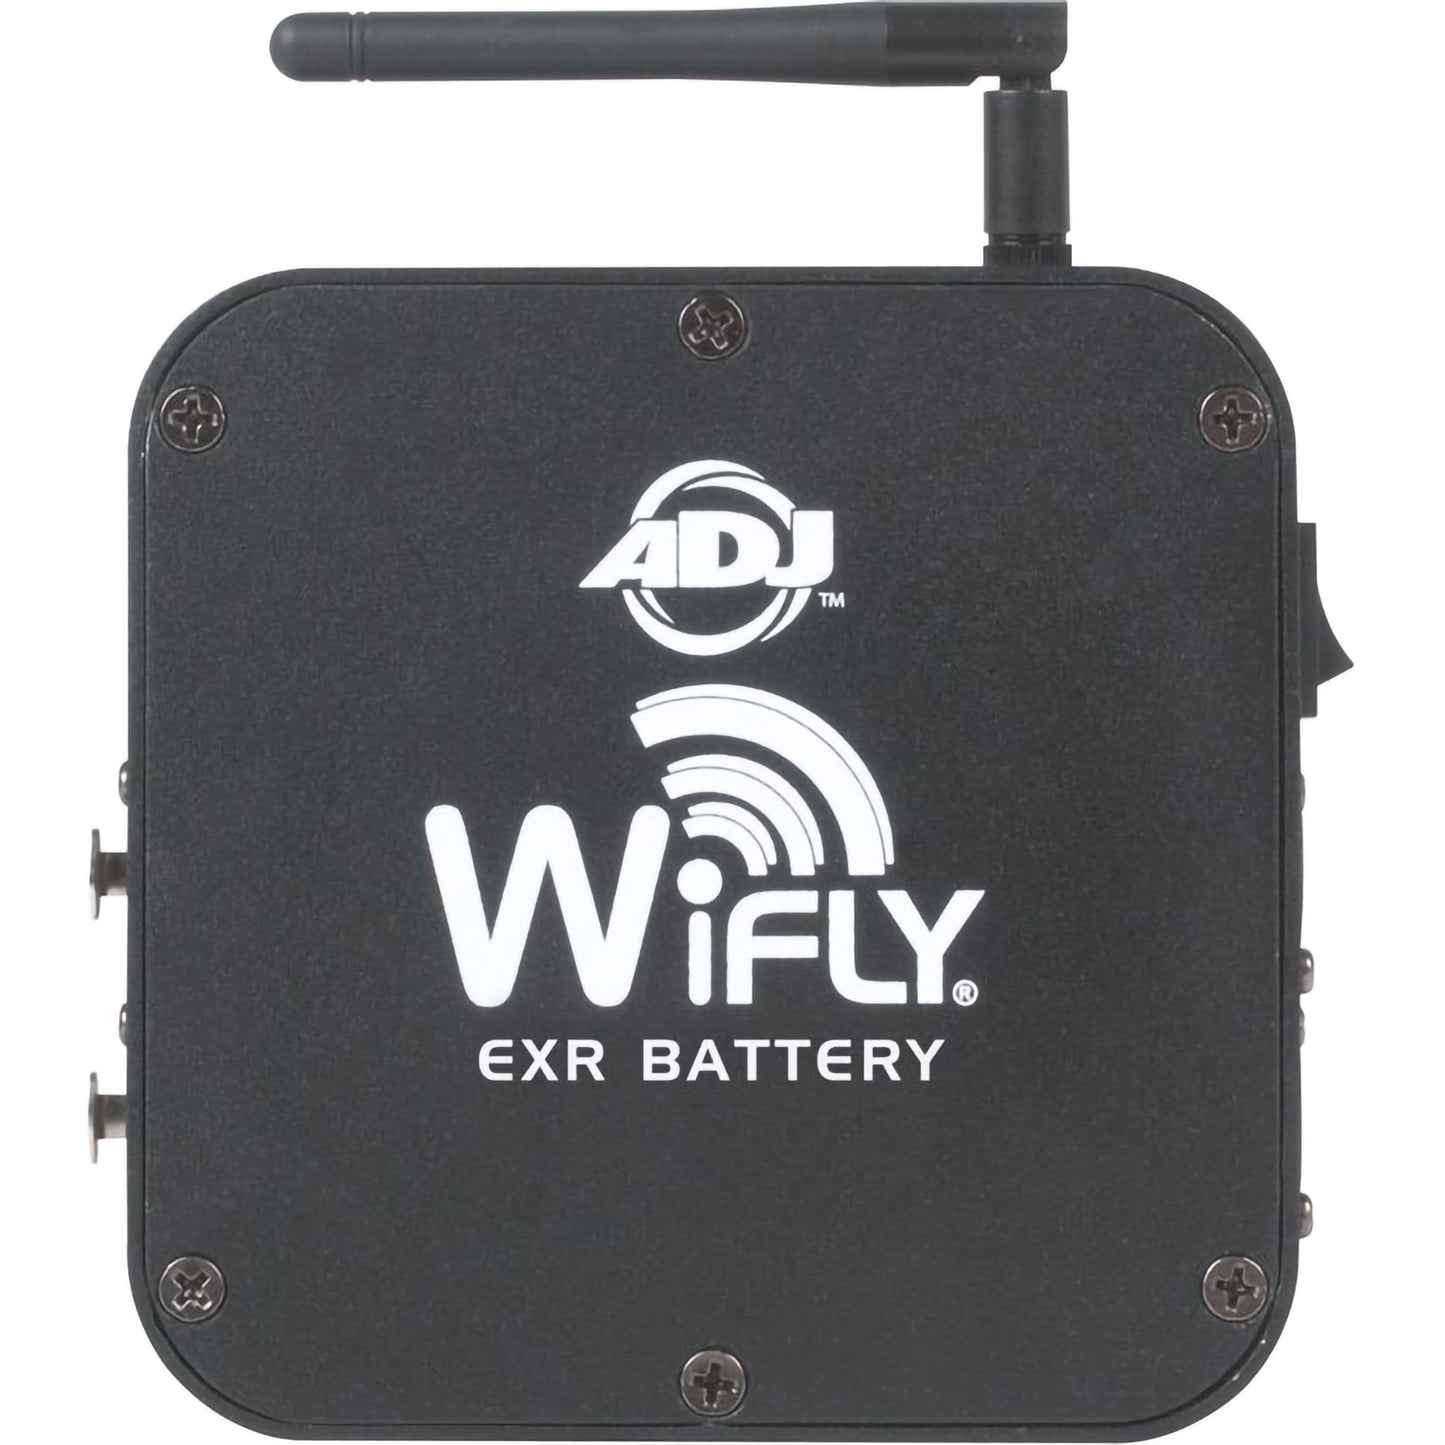 American DJ WiFly Battery Wireless DMX Transmitter and Receiver